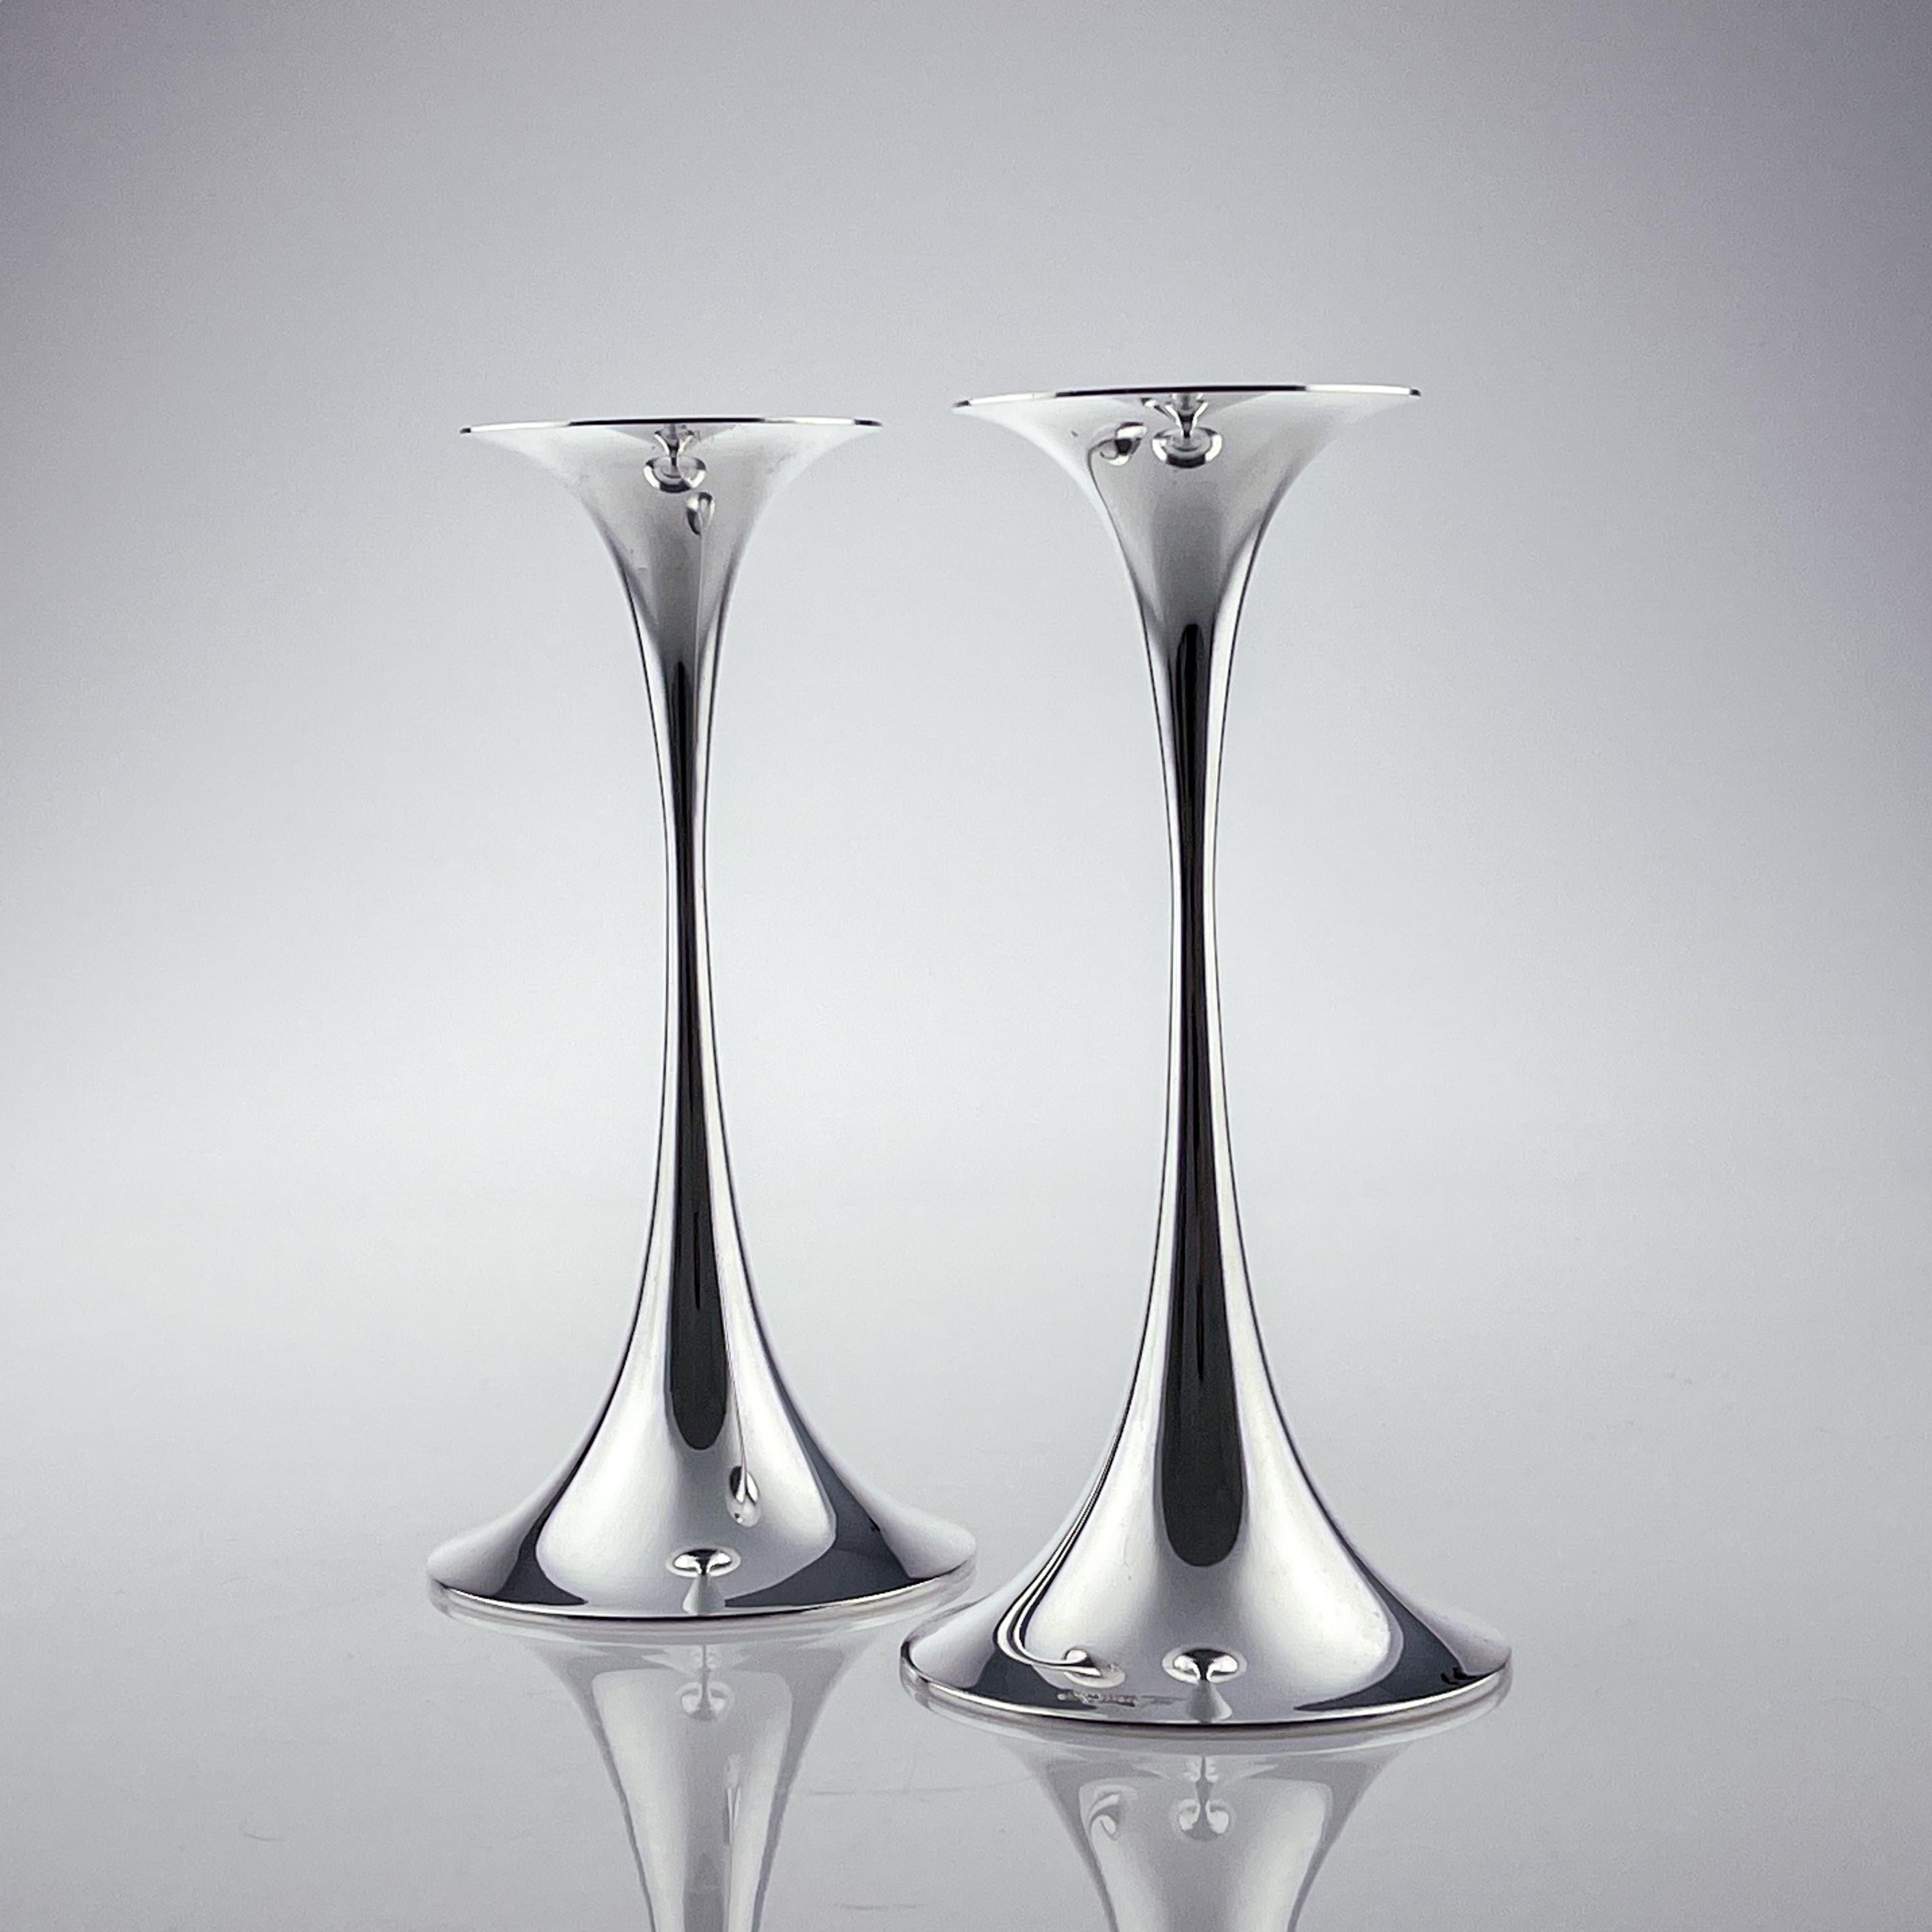 Scandinavian Modern Tapio Wirkkala, a Largest Size Pair of Silver “Trumpetti” Candlesticks, 1982